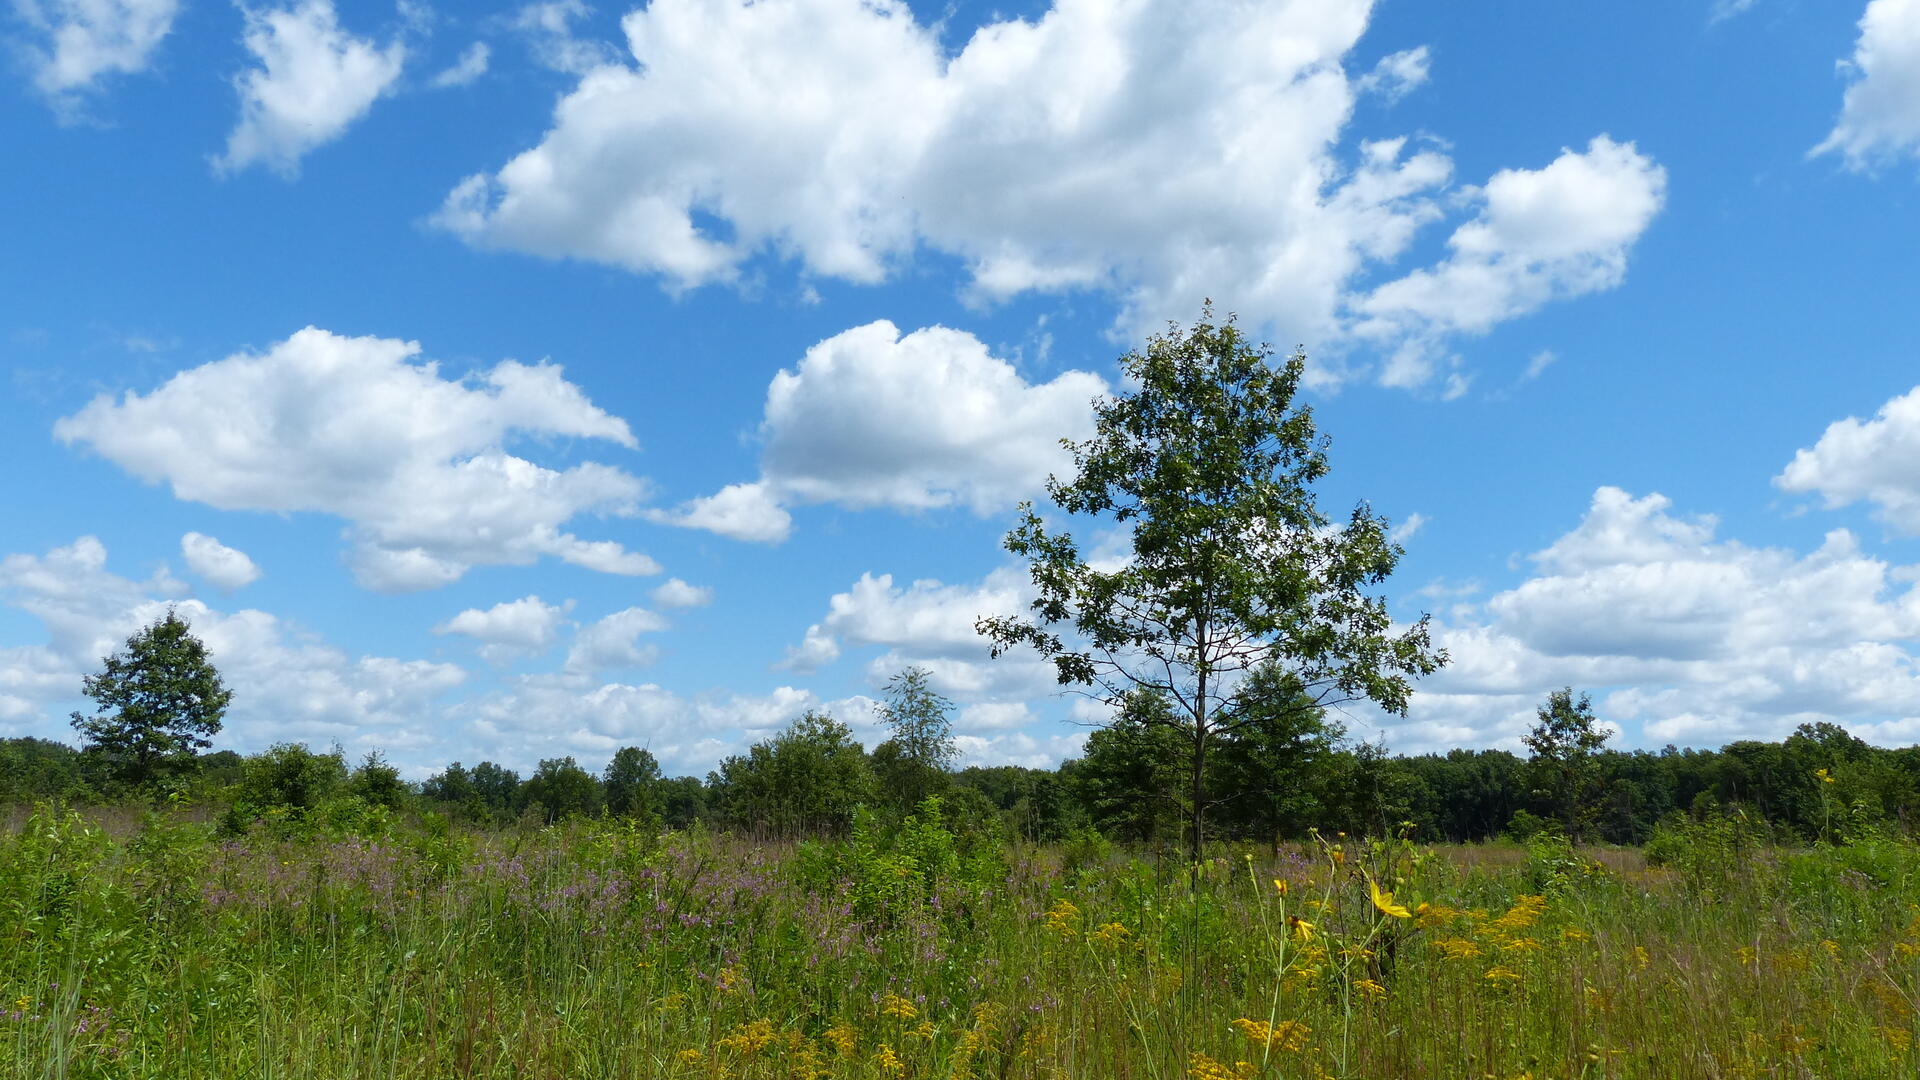 Prairie habitat with bright blue sky.